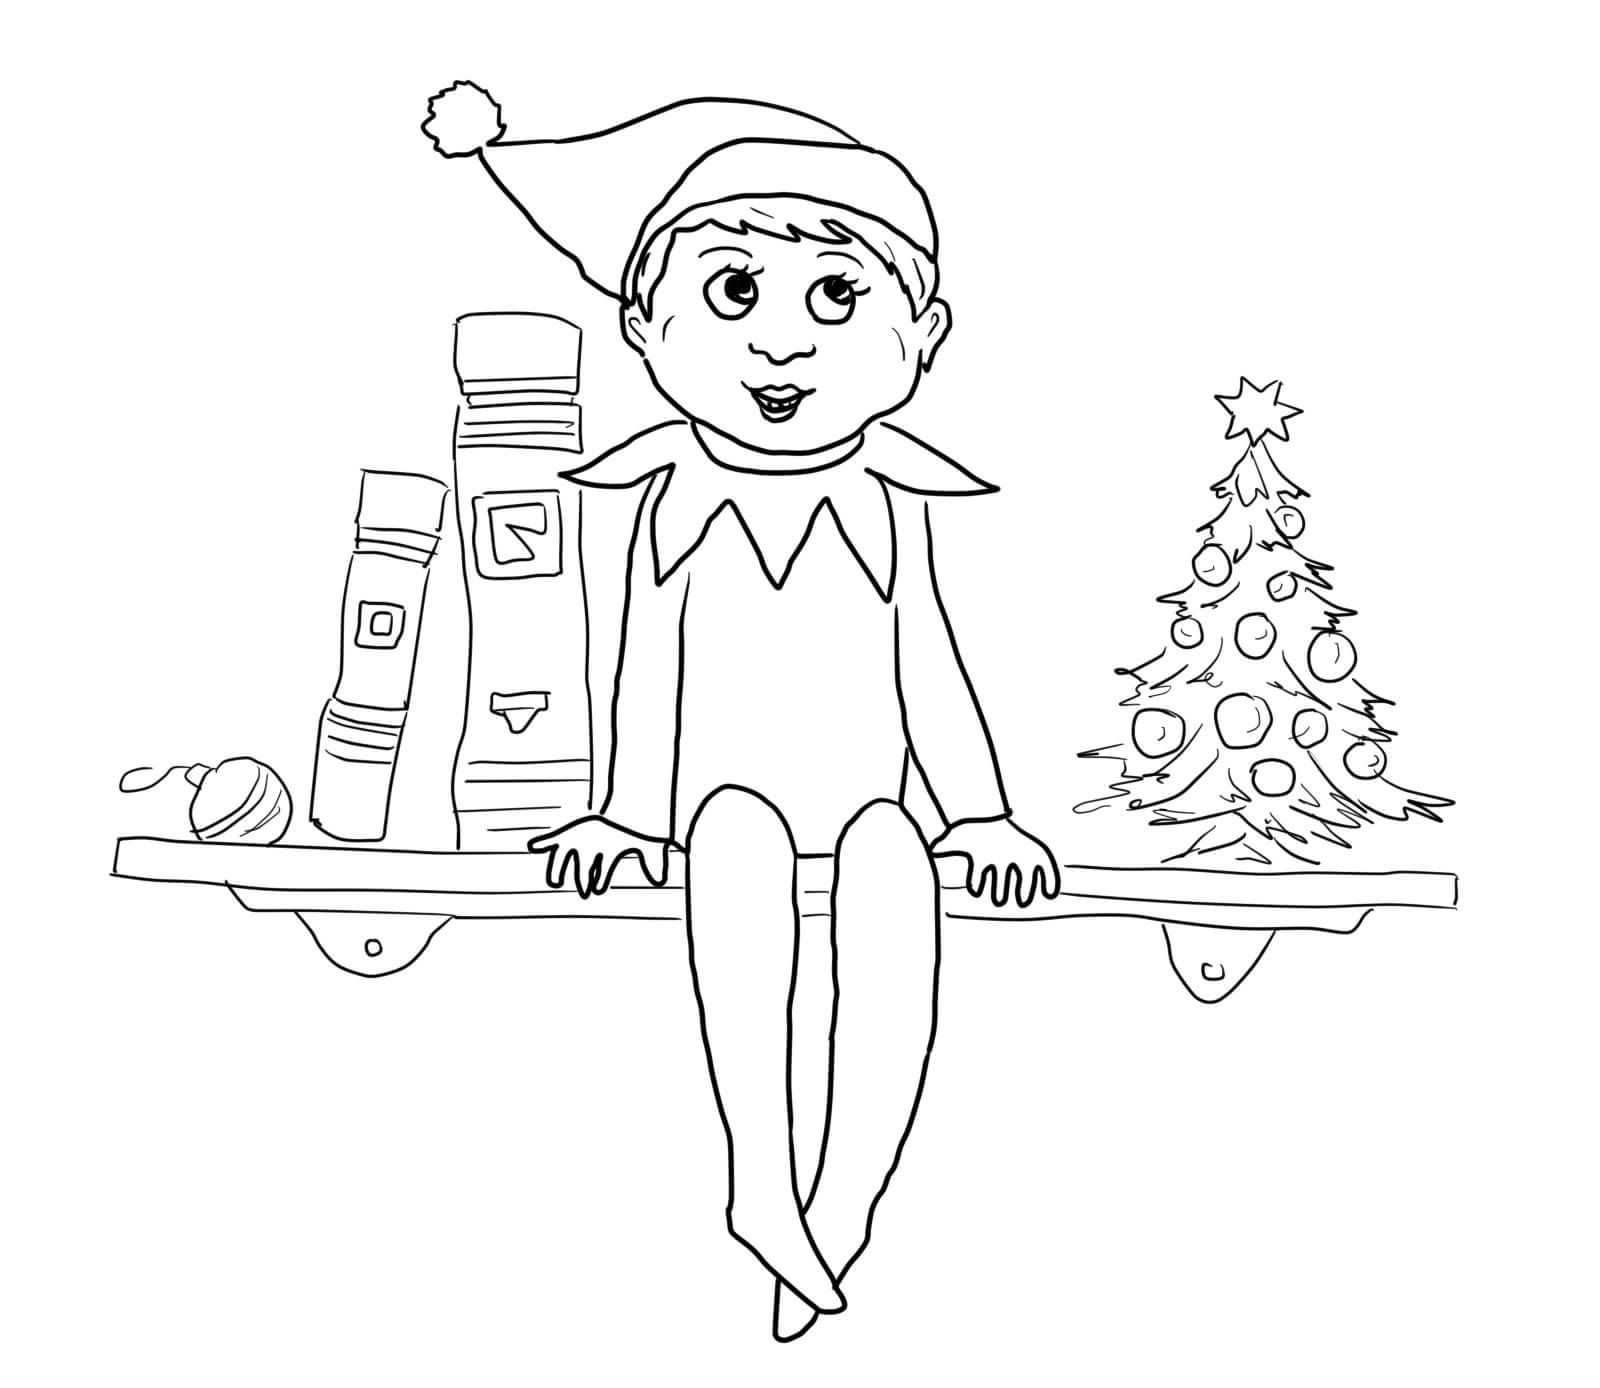 Elf on the Shelf Coloring Sheets Christmas | Educative Printable |  Printable christmas coloring pages, Elf on the shelf, Coloring pages